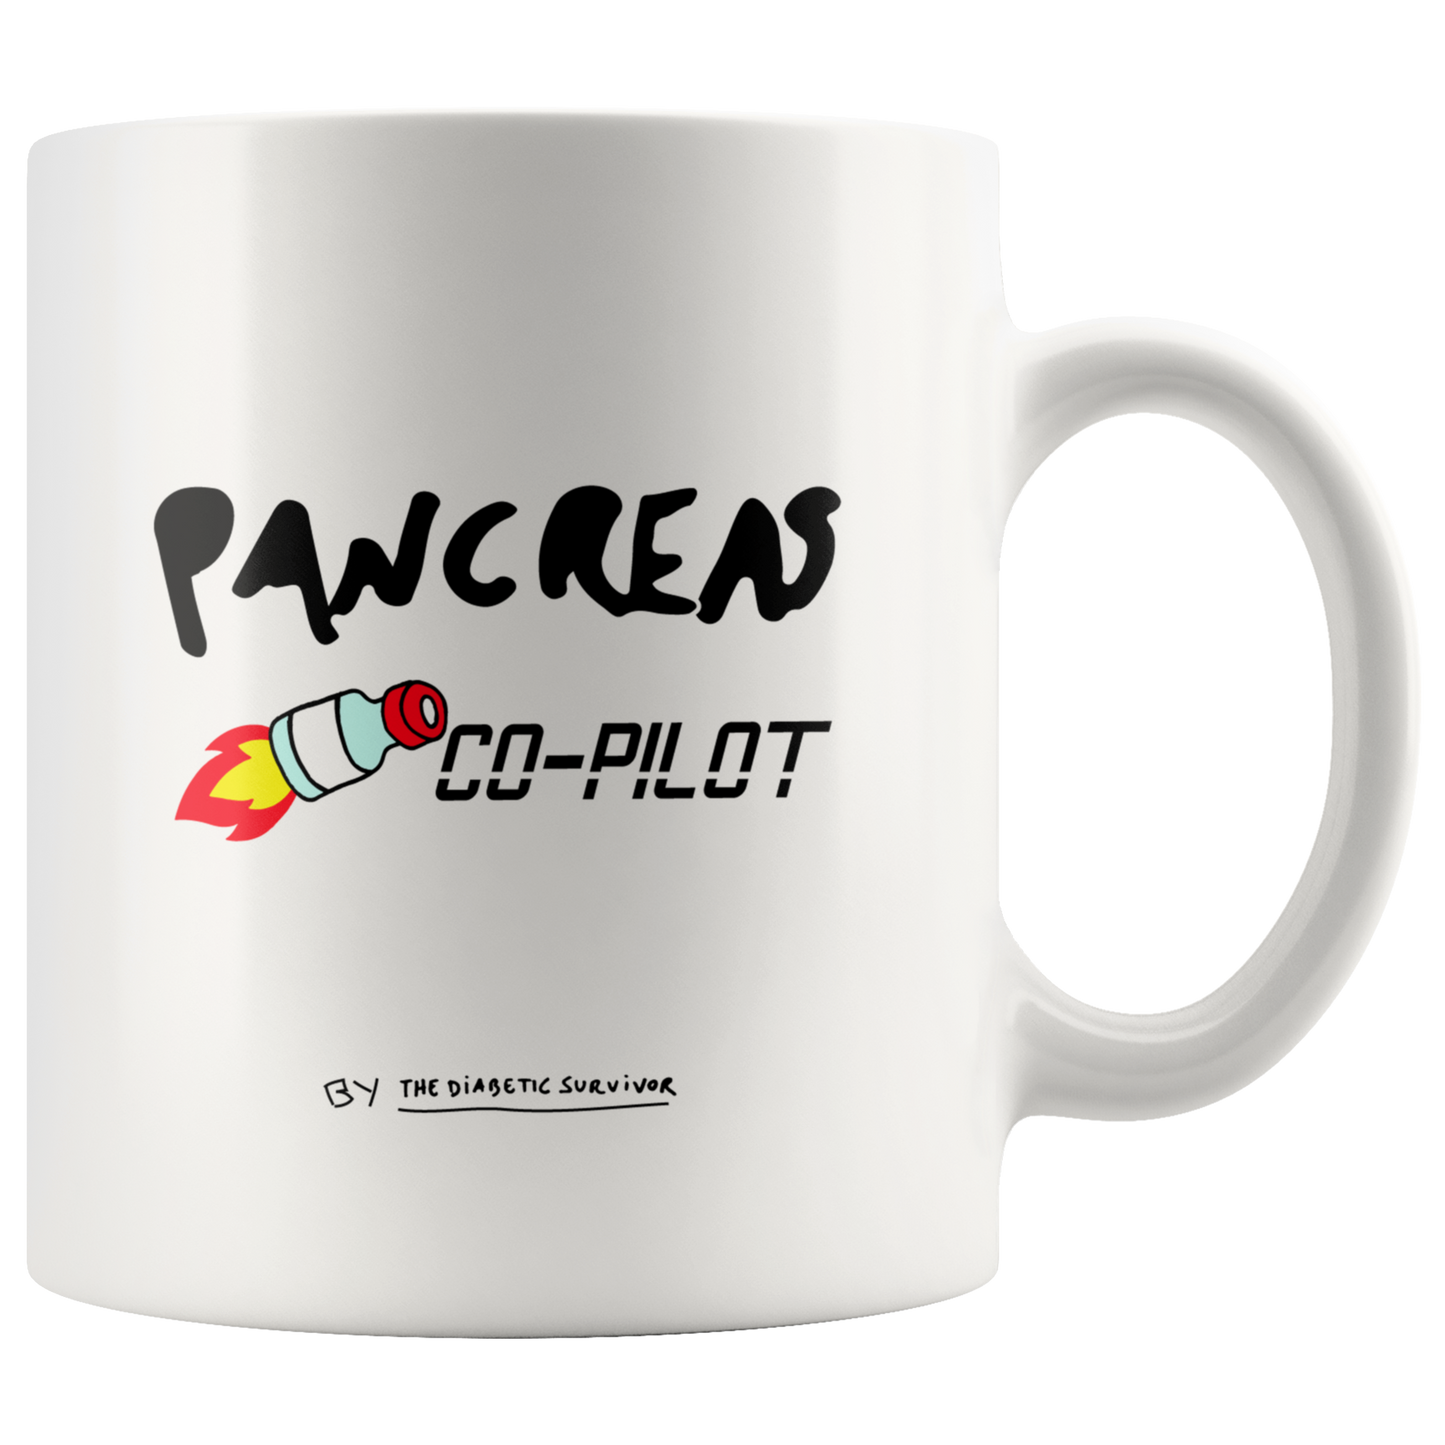 Pancreas CO-PILOT Ceramic Premium Mug